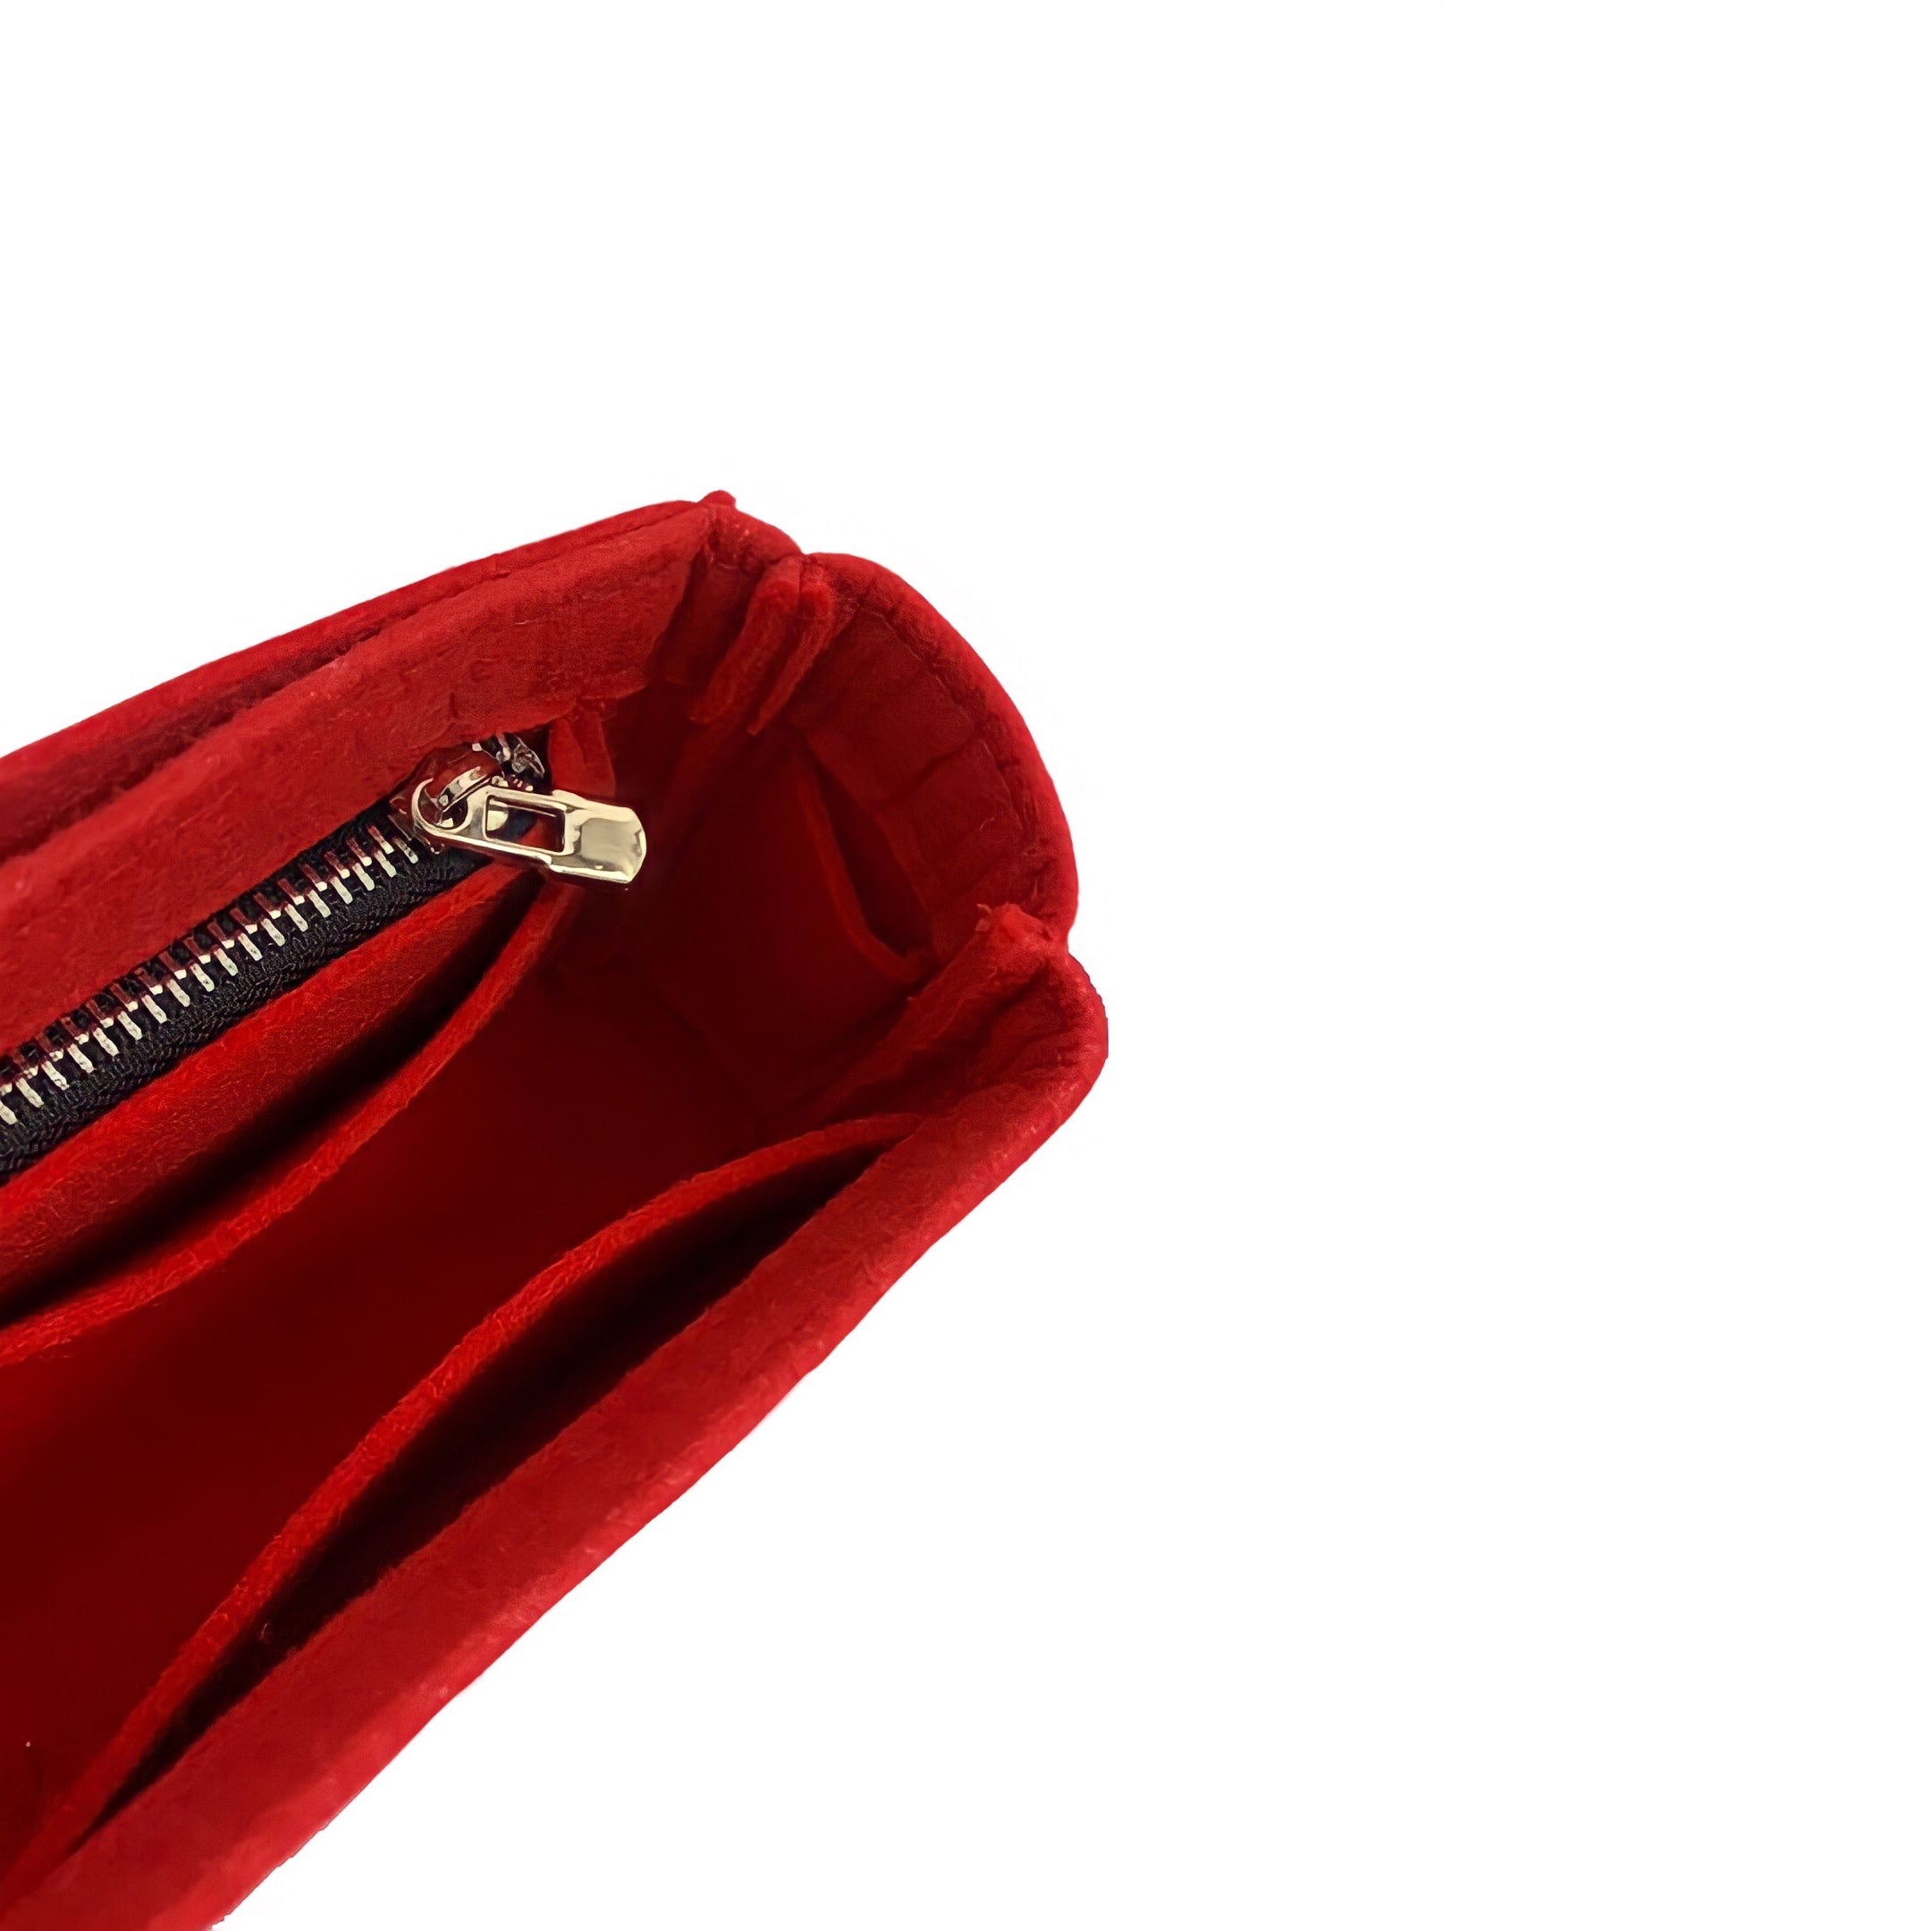 BaginBag | Handbag Organizer For Gucci GG Marmont Medium size bag | Designer Purse Insert | Bag Insert Organizer | Gucci Organizer | Bag Organizer | Tote bag organizer |  Bag protector | Organizer inserts for handbags | purse insert organizer